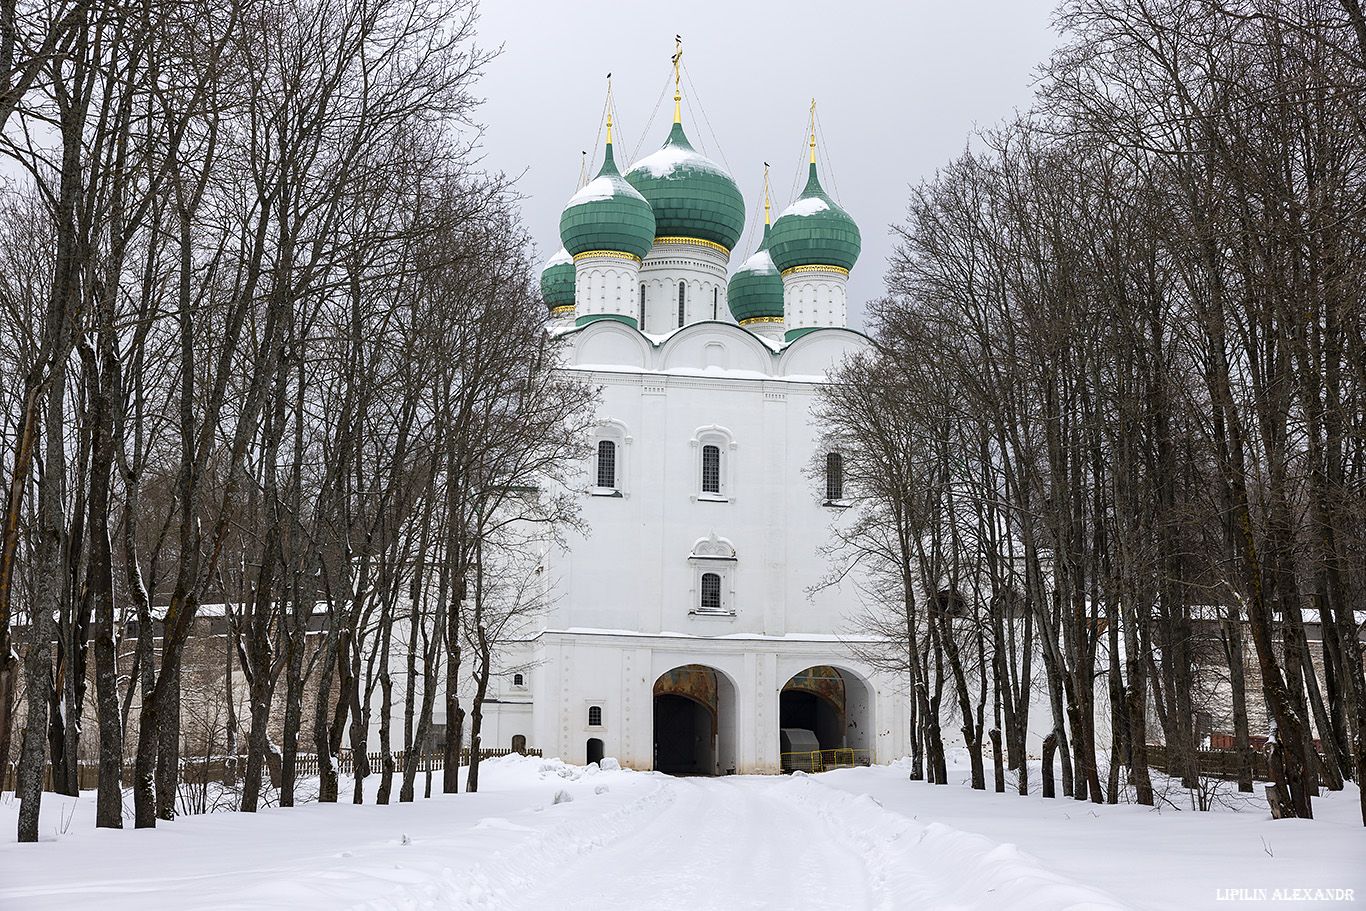 Борисоглебский мужской монастырь